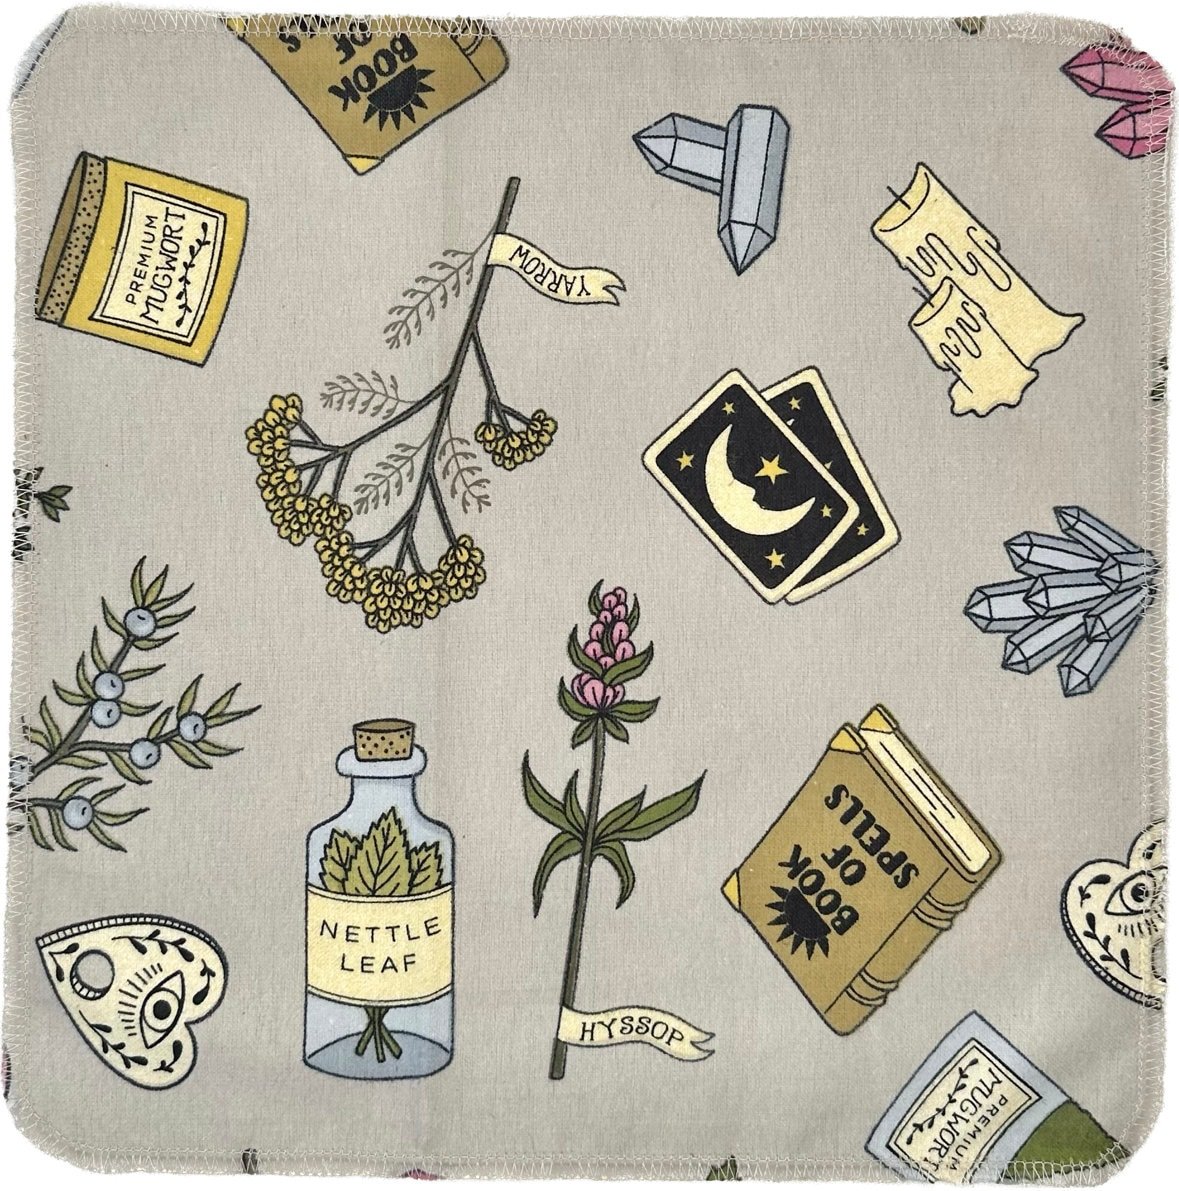 Herbs & Magic Paperless Towels || Herbalist Unpaper Towels || Eco Sustainable Zero Waste Kitchen